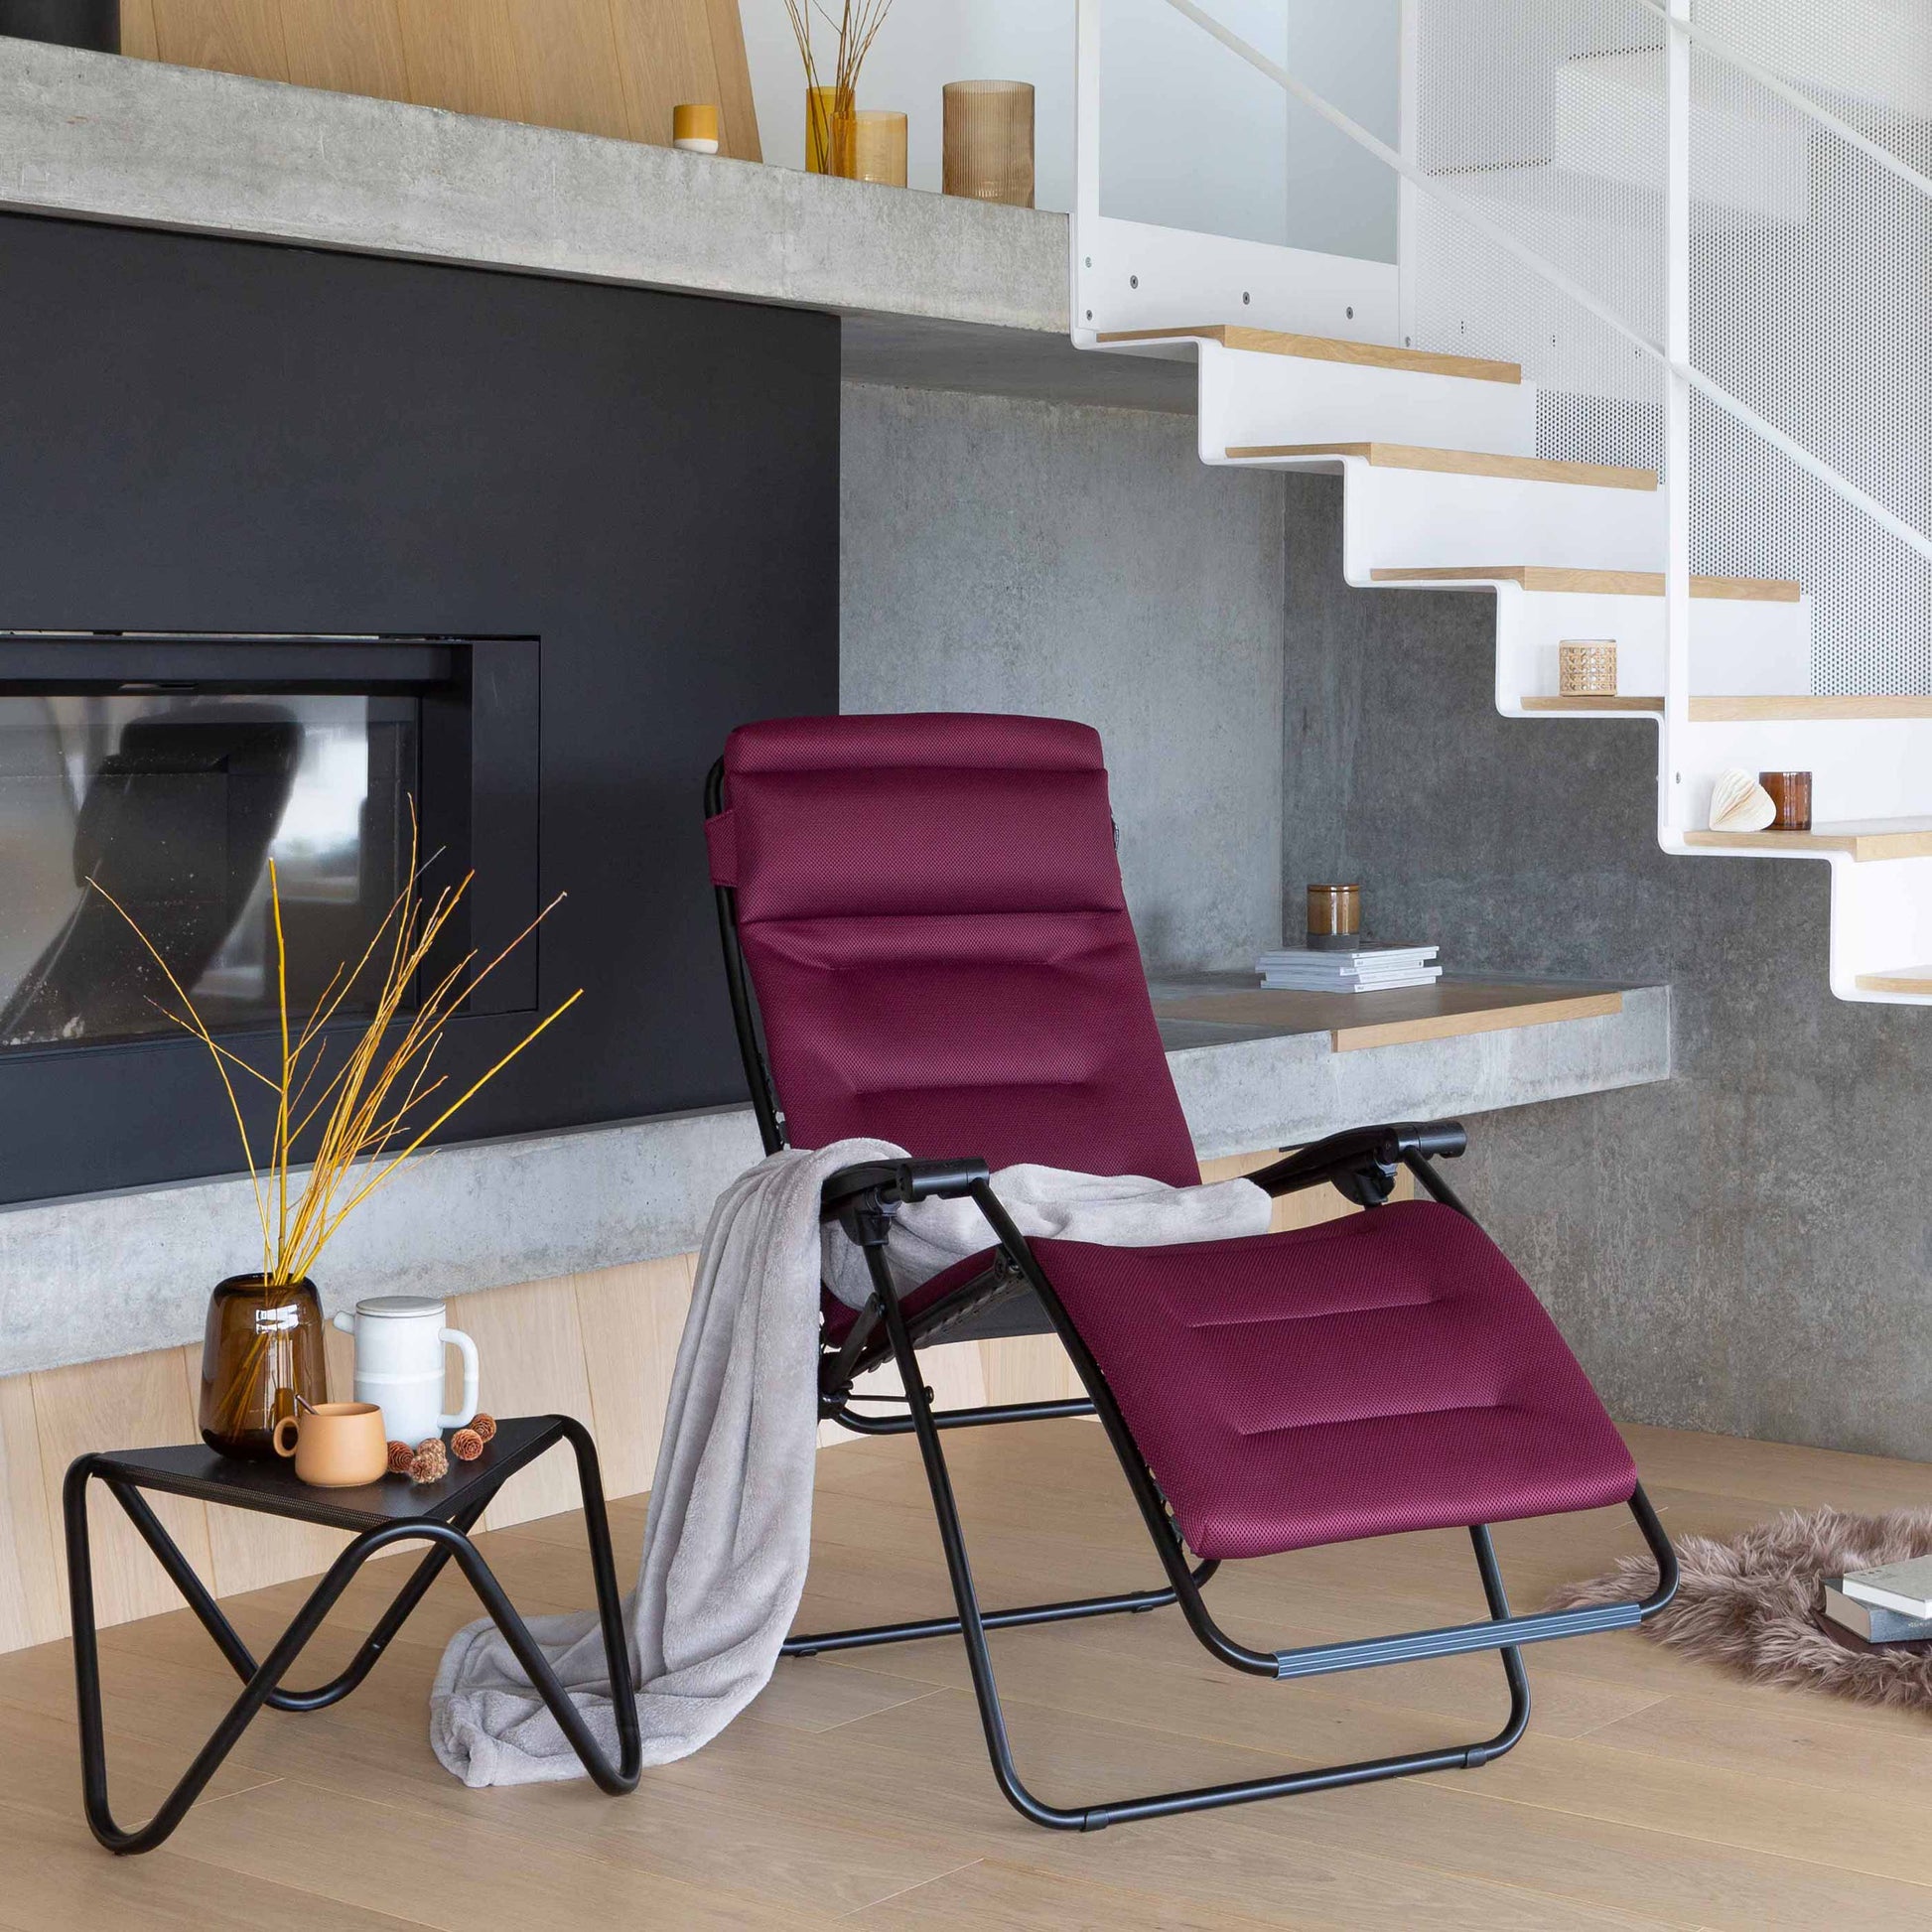 reclining chair clip tubing LAFUMA bordeaux black | MOBILIER comfort rsxa air